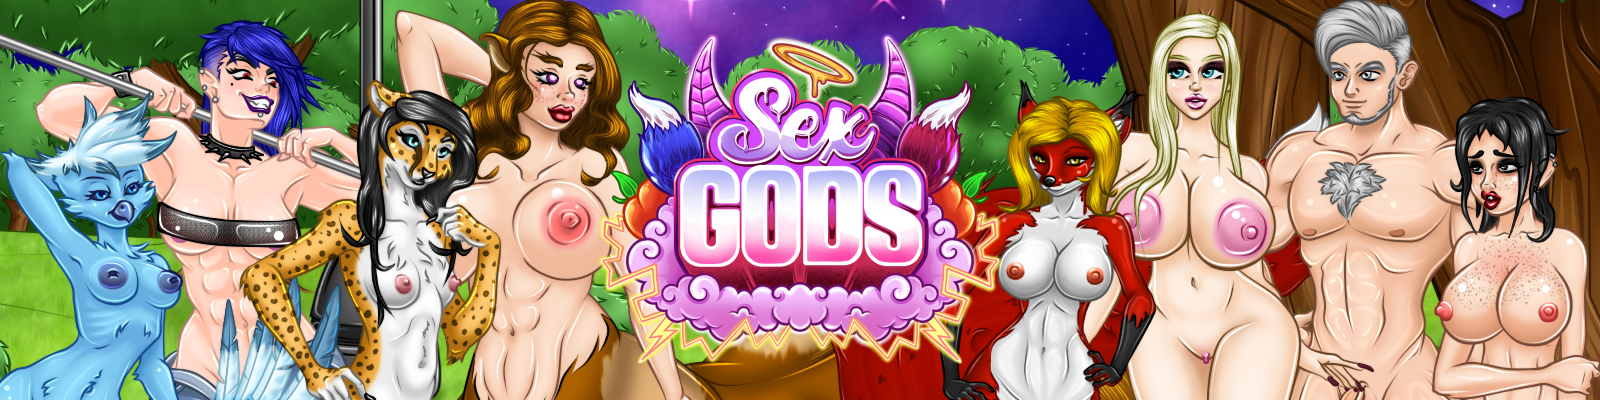 Mega Man Gay Porn Game - Sex Gods by Guapoman